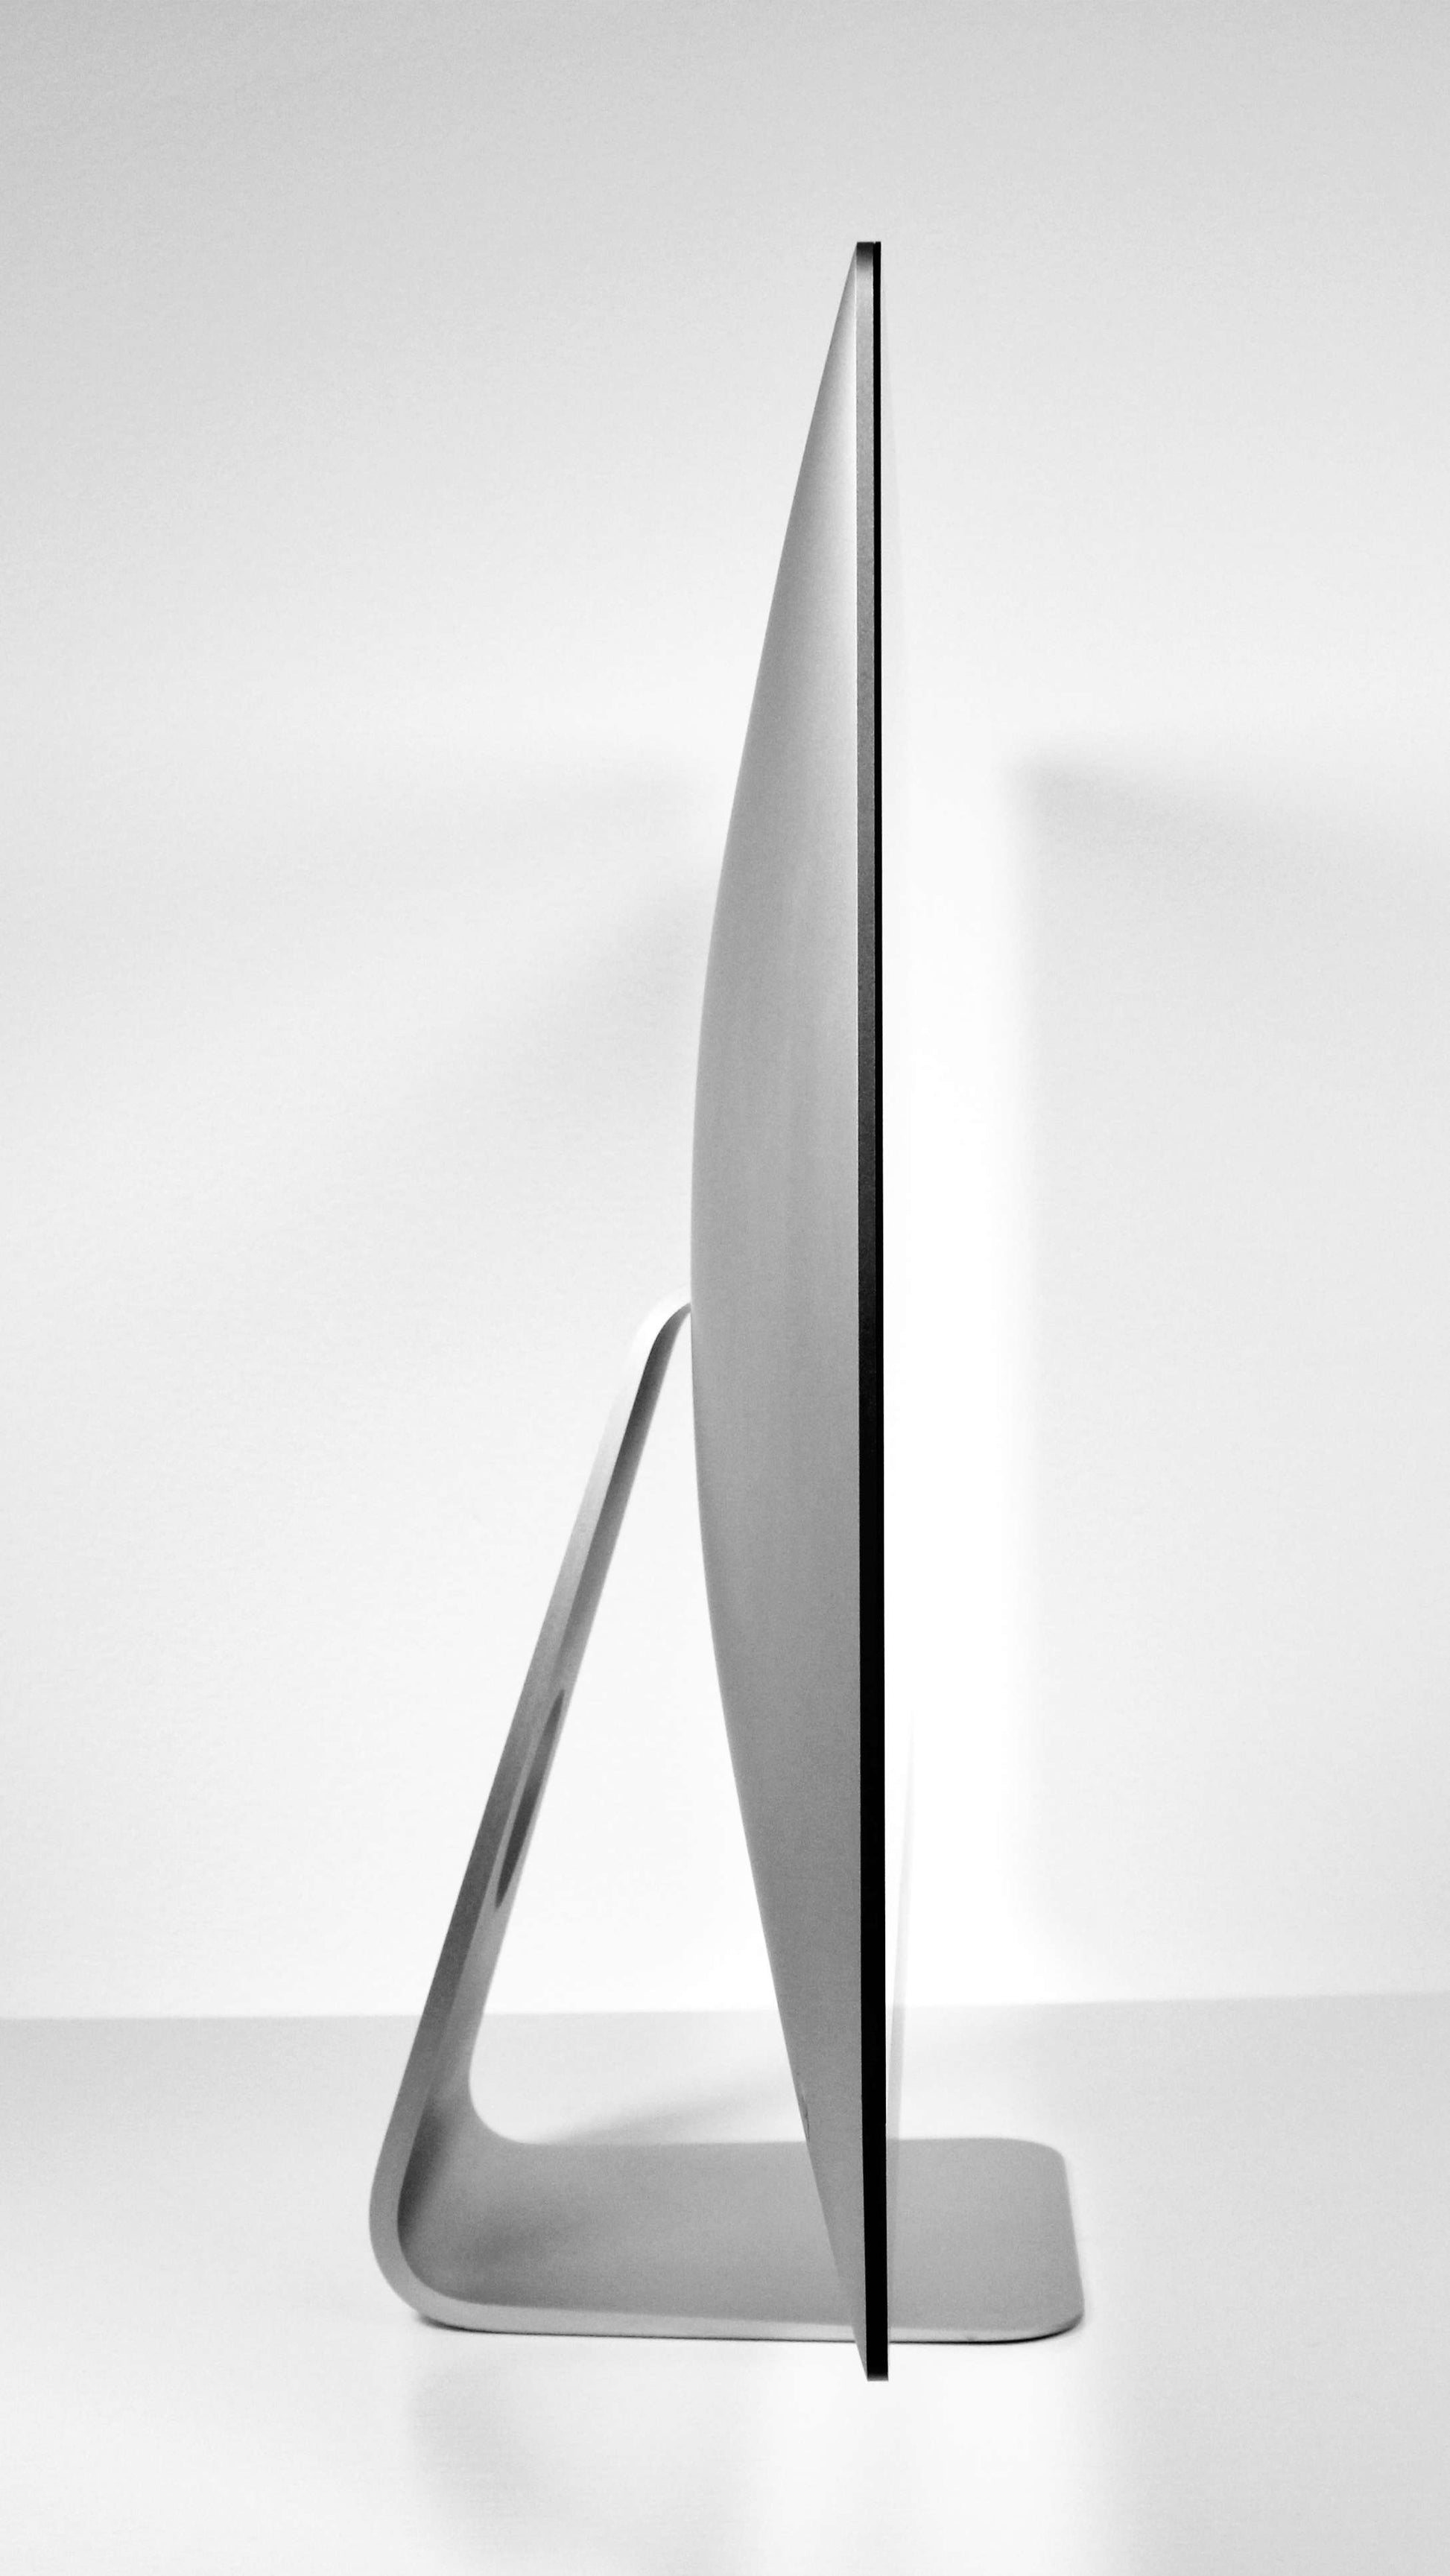 Apple iMac 5K 27-inch (Mid 2019) 3.7GHz i5 4TB SSD 128GB RAM All-In-One Desktop